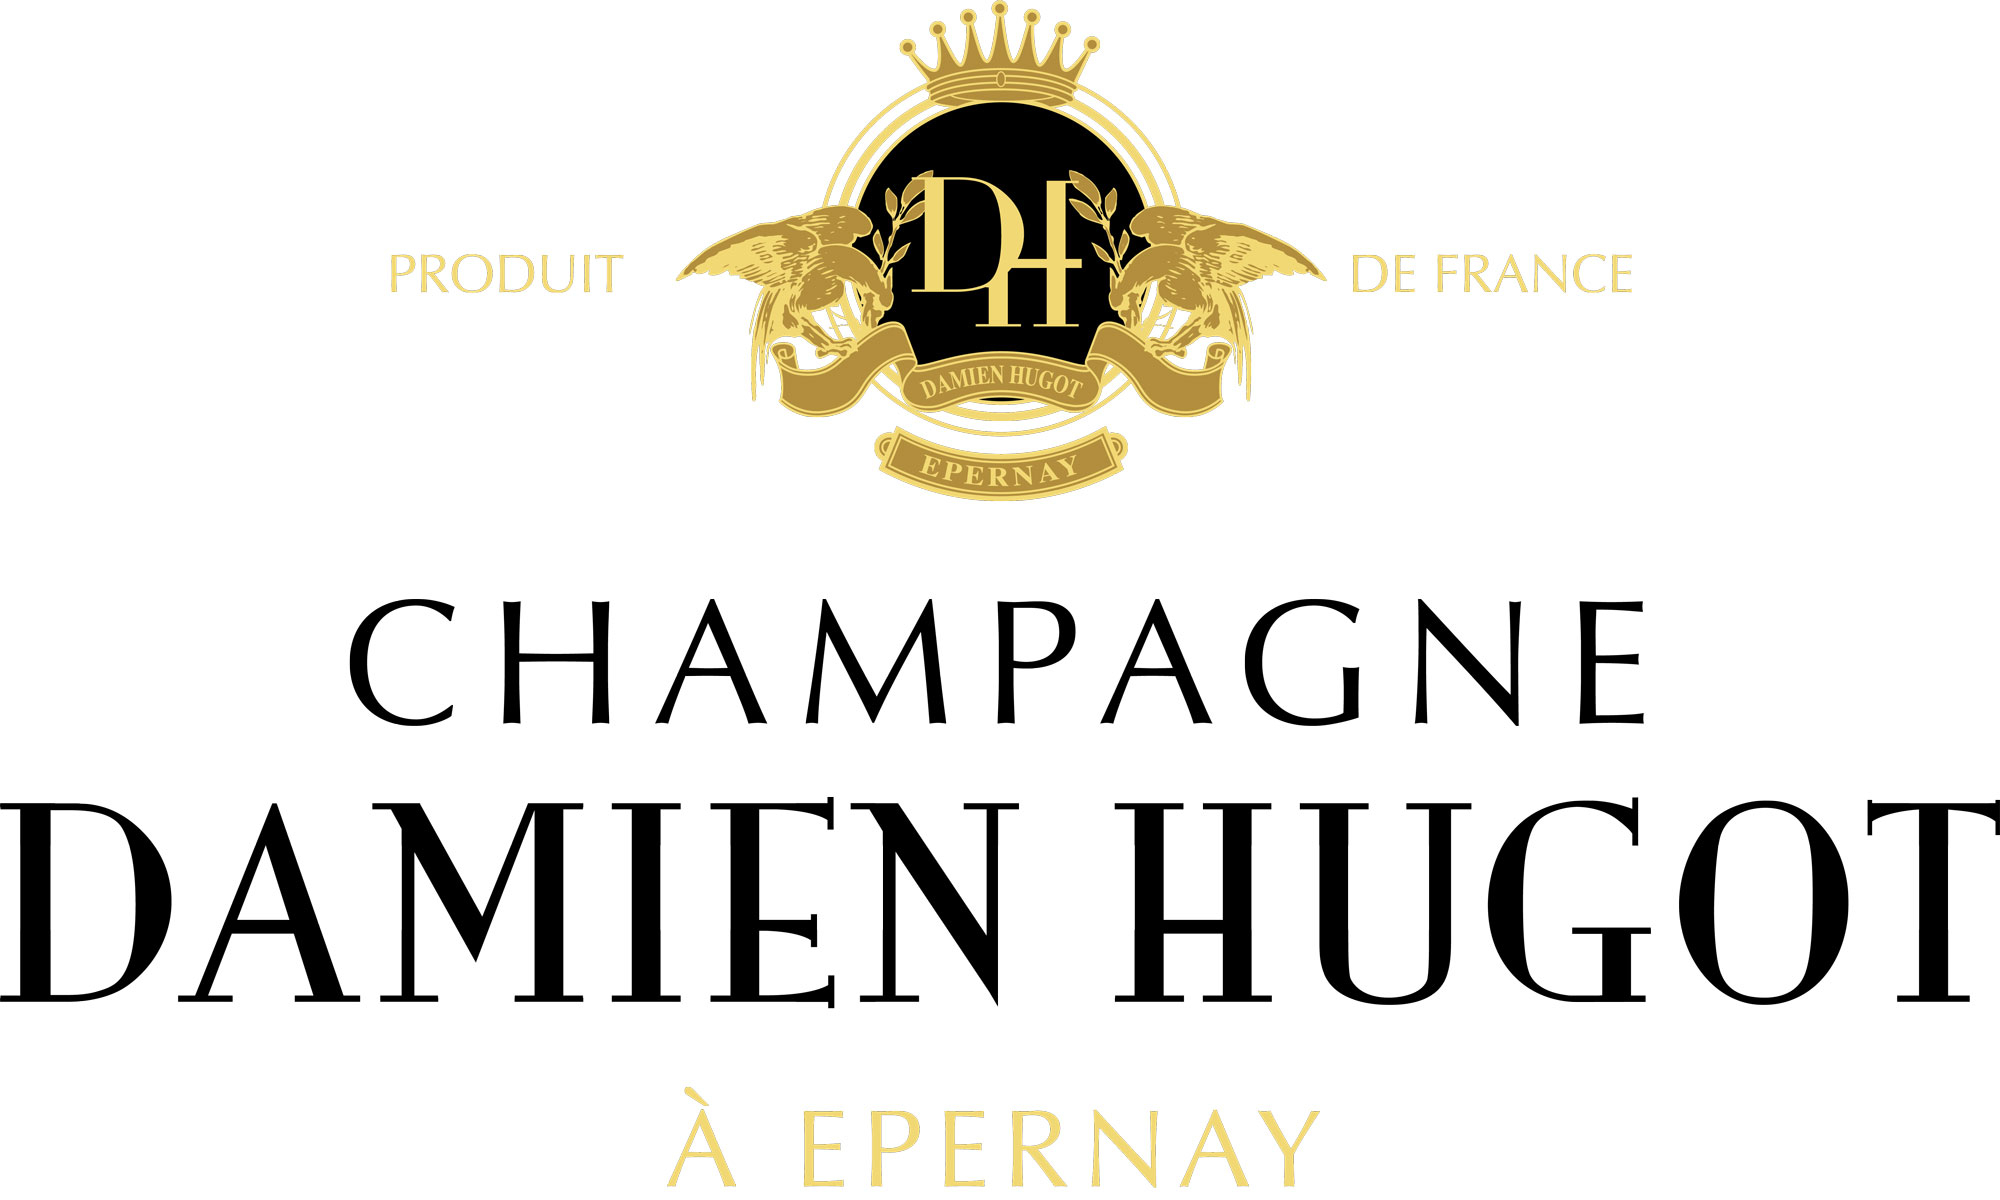 Champagne Damien Hugot